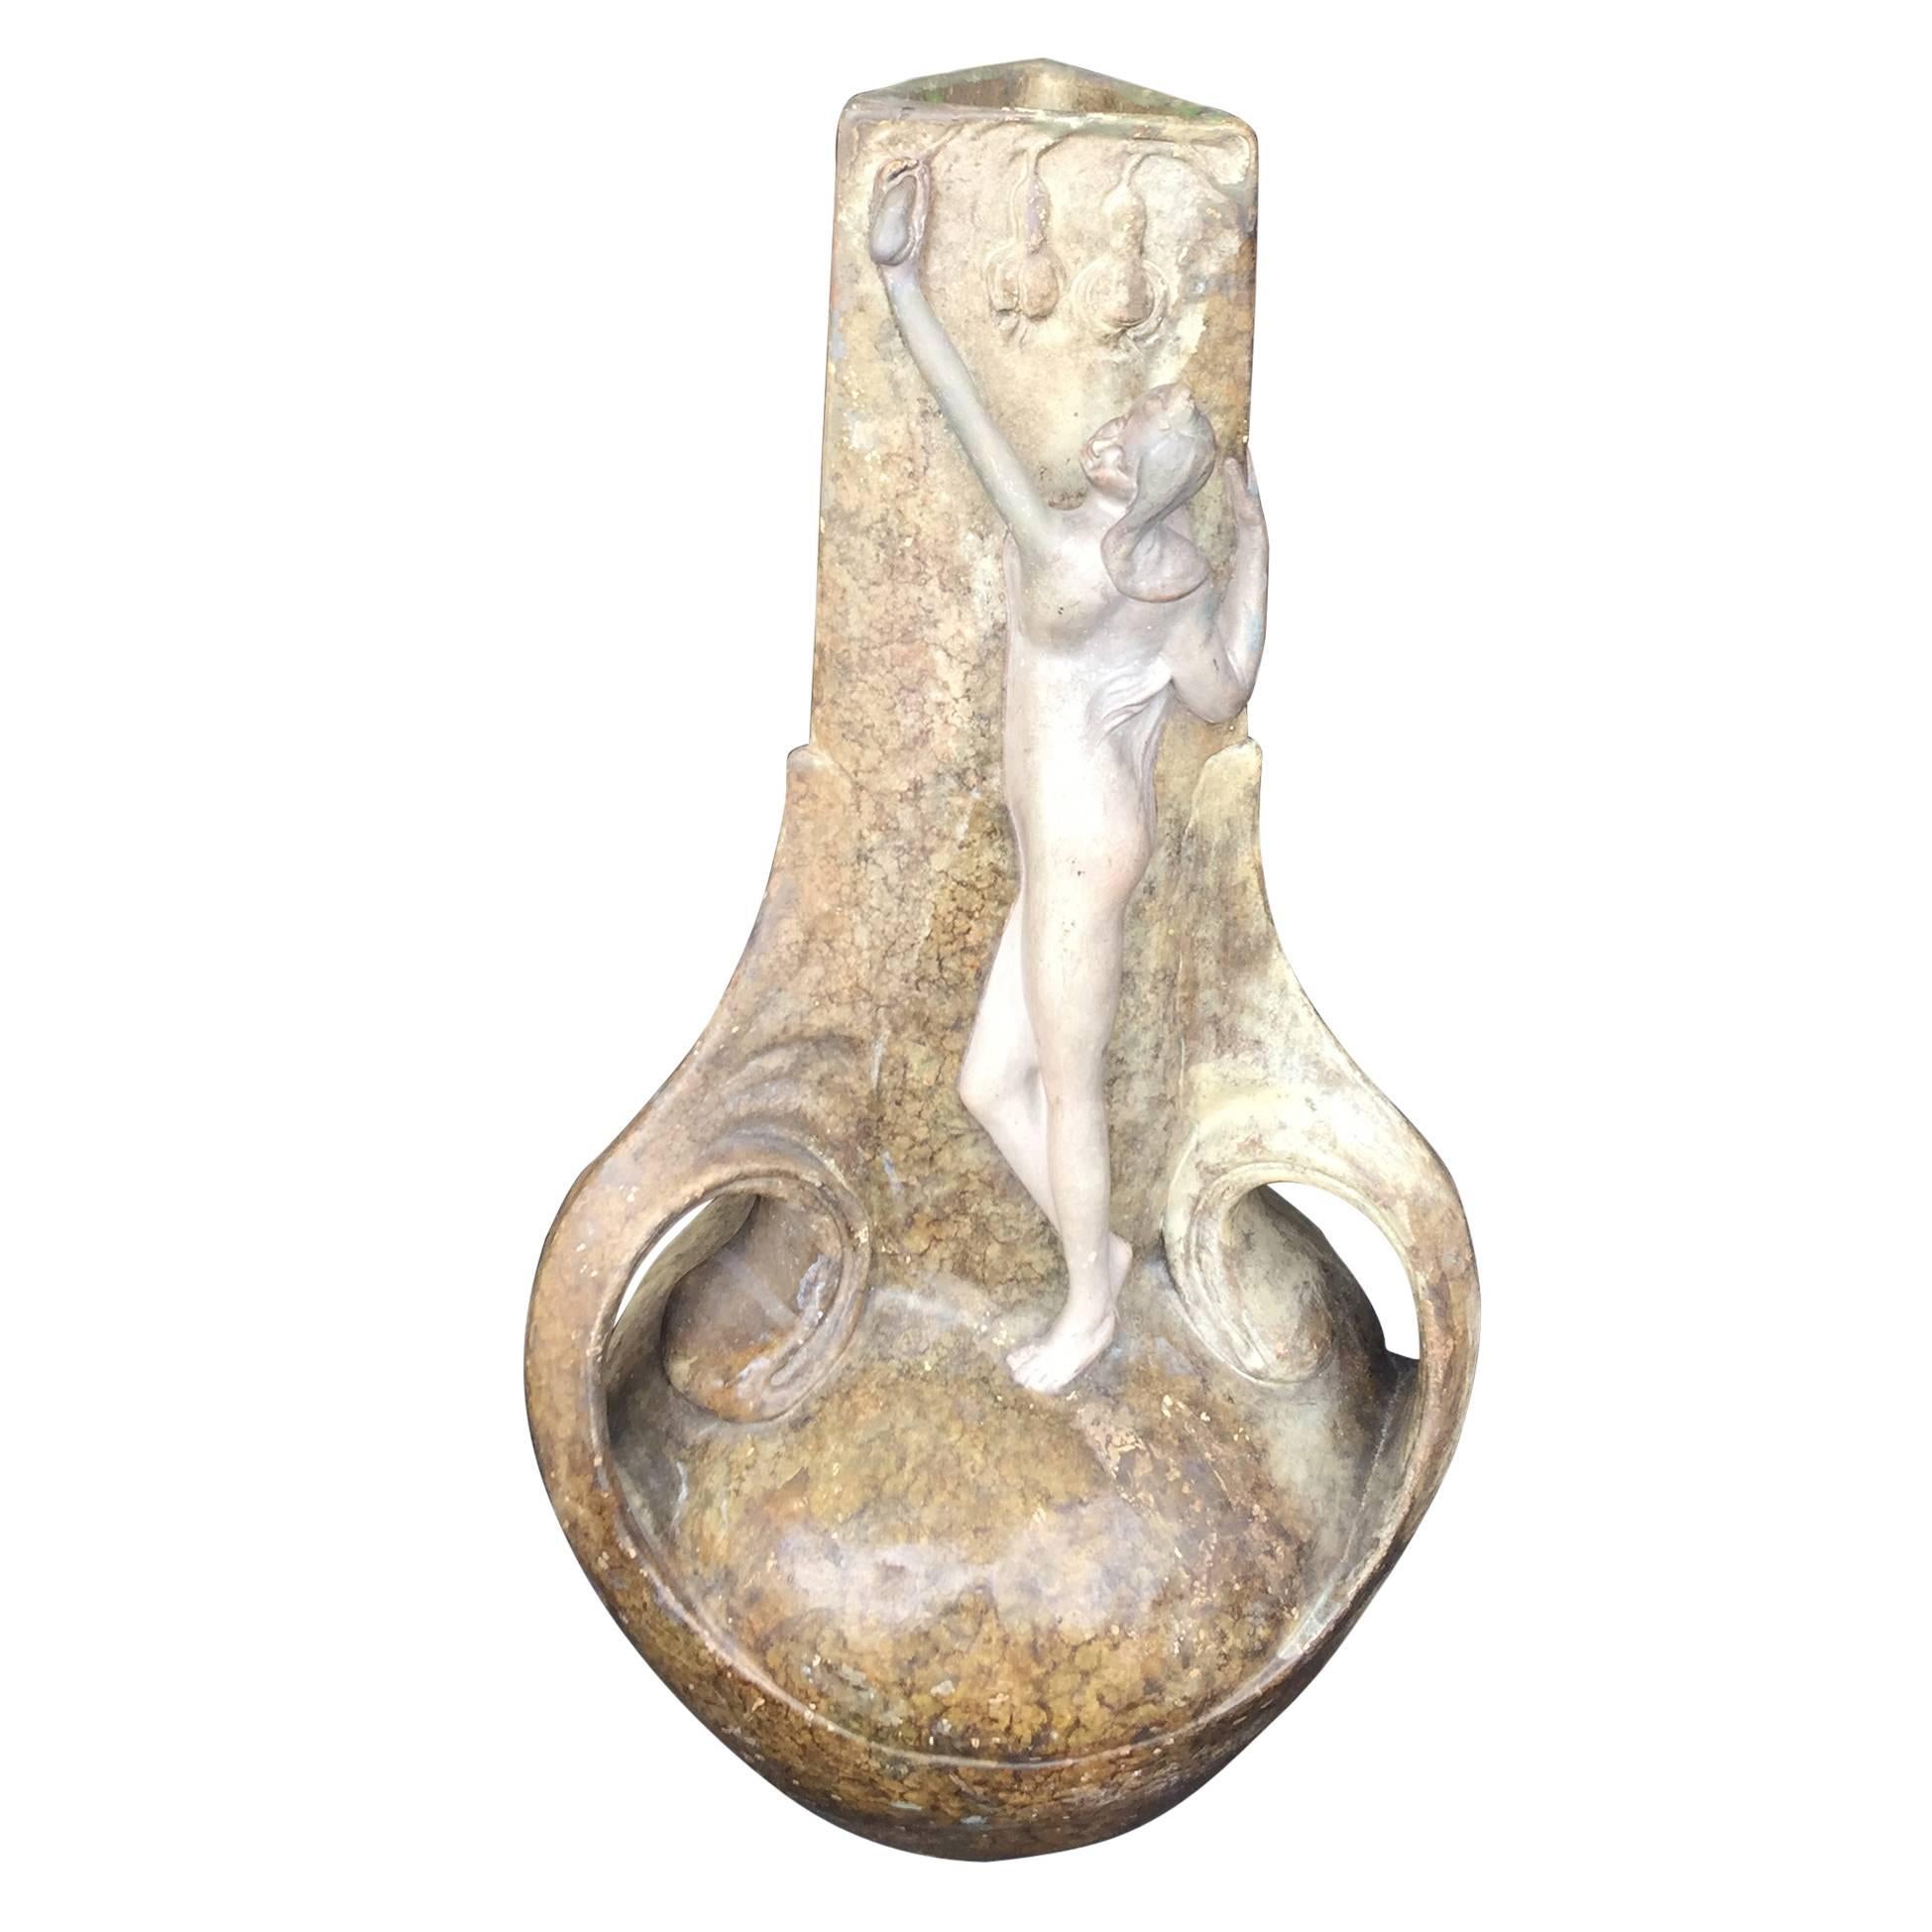 Lovely Art Nouveau Hand made Hand glazed Amphora "Nude" Vase, circa 1890